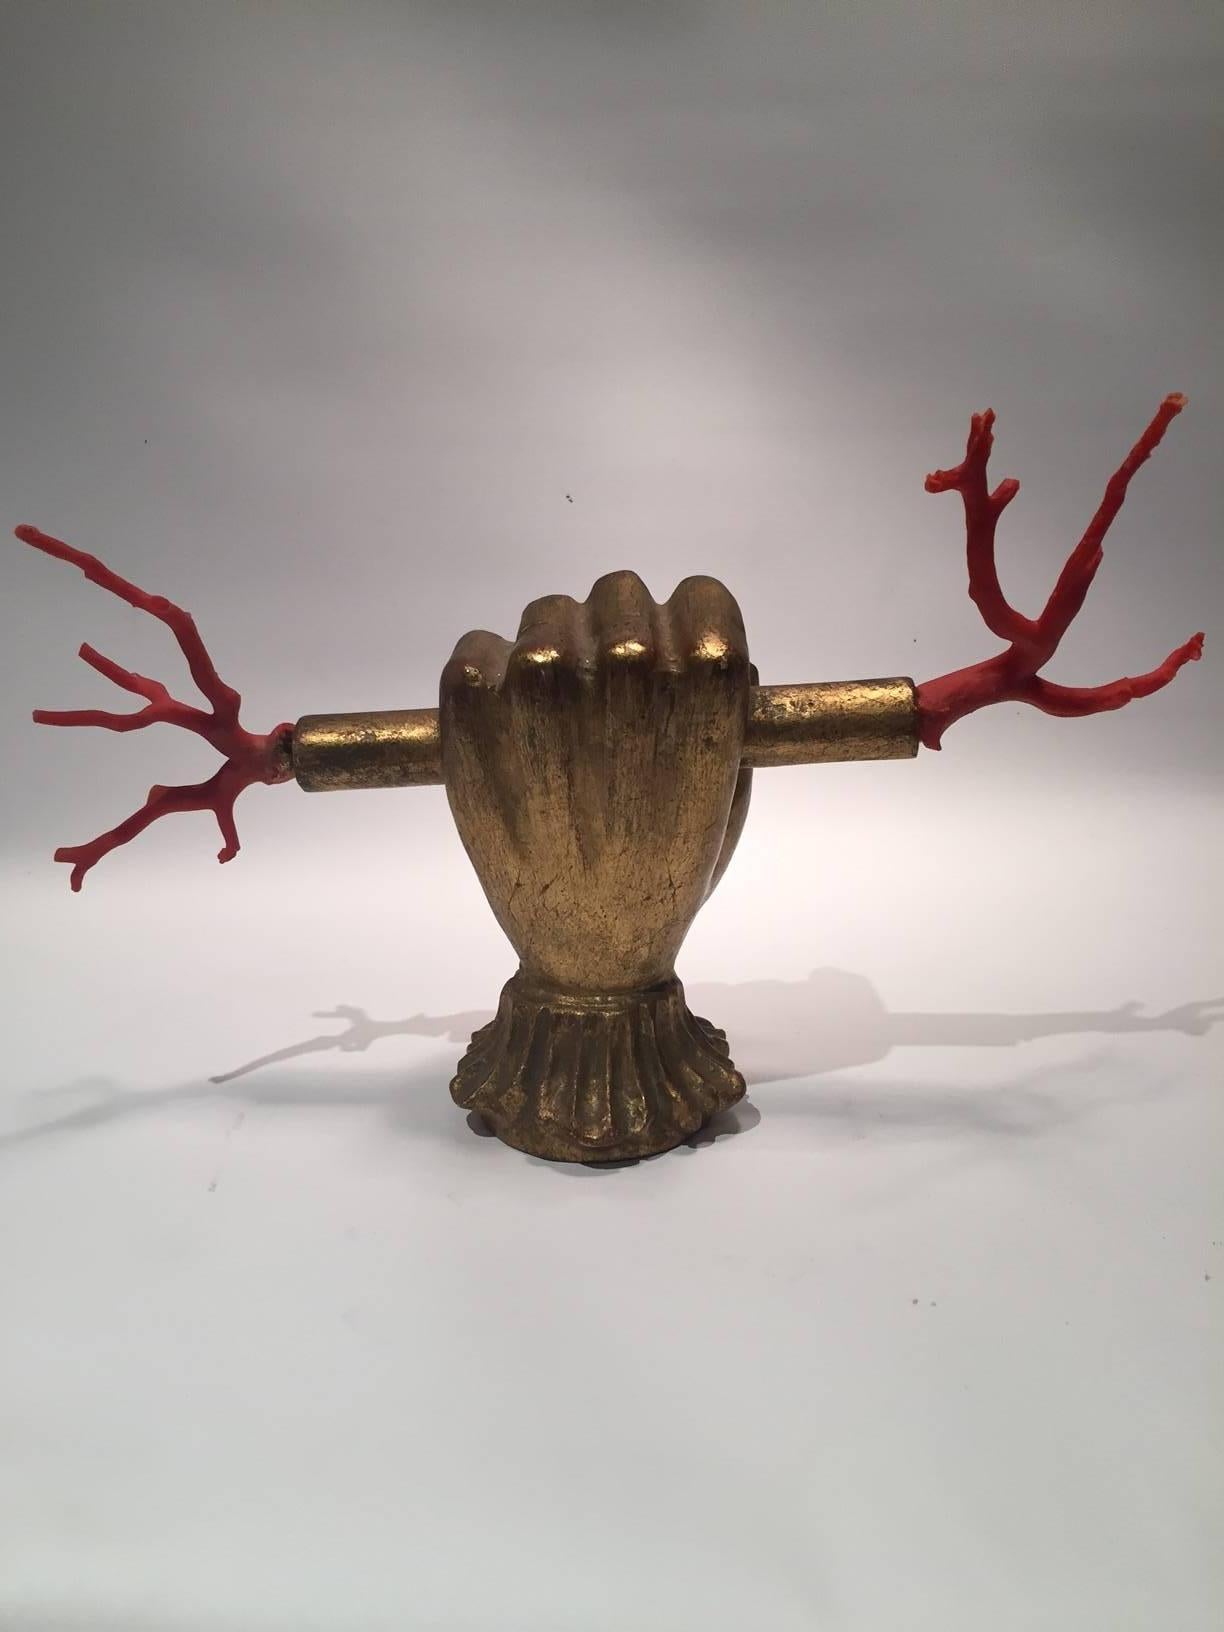 Renaissance Italian Gilded Wooden Hand Clutching a Red Mediterranean Coral Lightning Staff